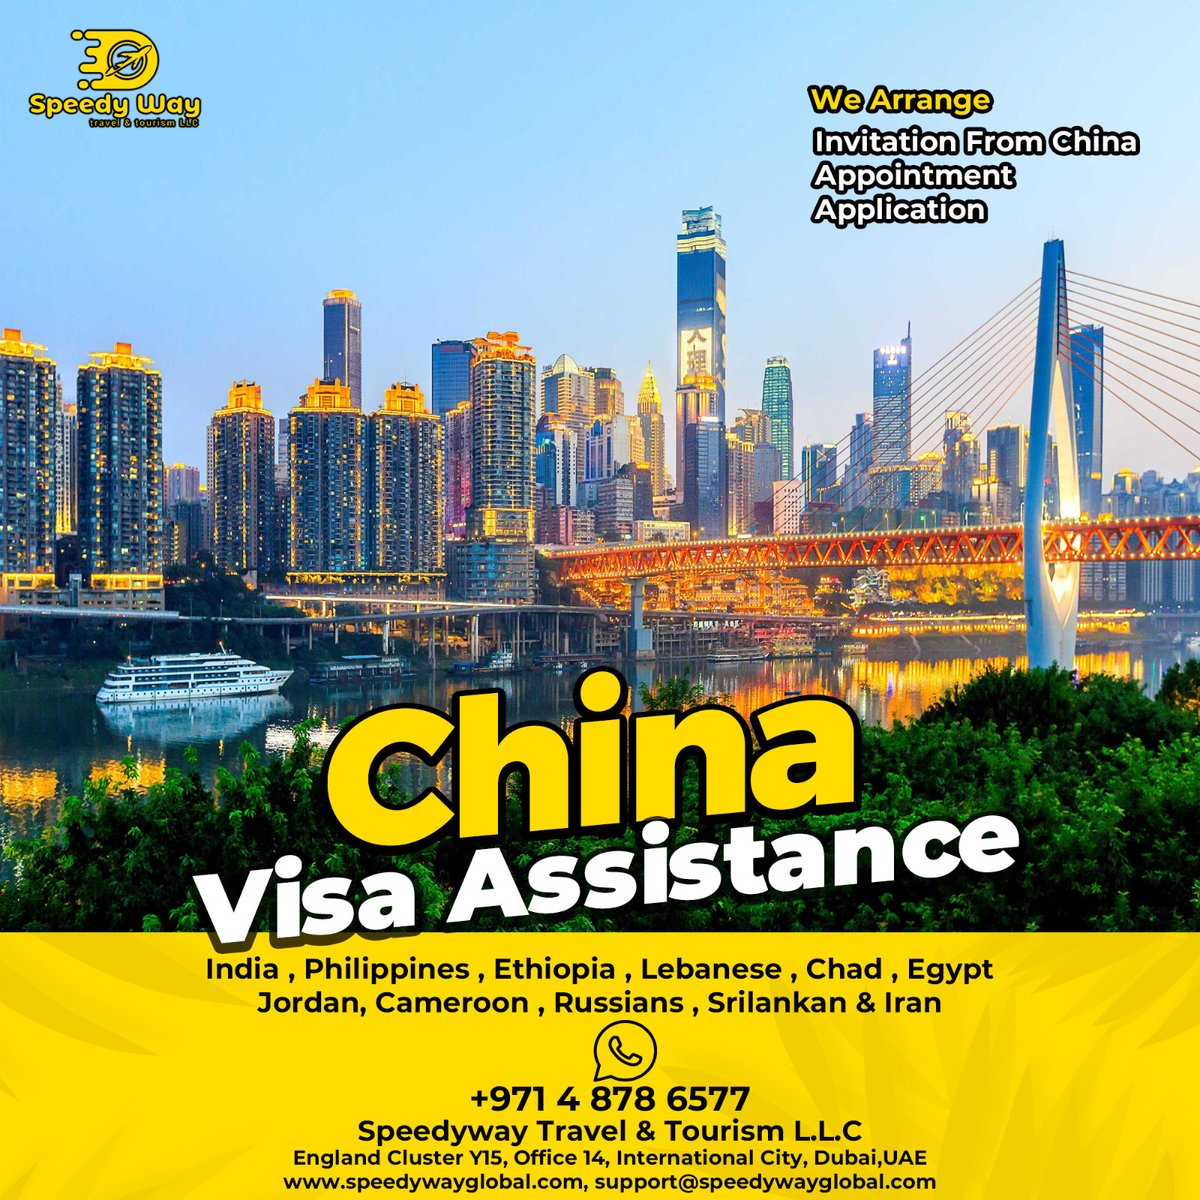 China Visa Assistance 

For 🇮🇳India , 🇵🇭Philippines , 🇪🇹Ethiopia , 🇱🇧Lebanese , 🇹🇩Chad , 🇪🇬Egypt , 🇯🇴Jordan, 🇨🇲Cameroon & 🇷🇺Russians,🇱🇰 Sri Lankan & 🇮🇷Iran 

#speedywaytravels #speedywayglobal #China #chinavisa #tourist